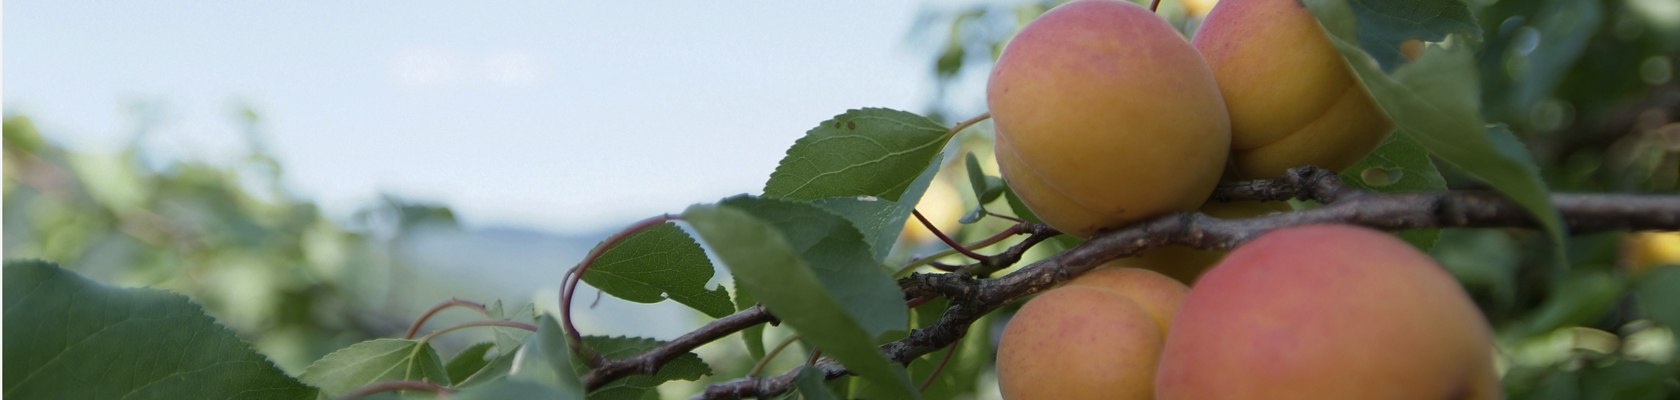 Wachau apricots, © Donau Niederösterreich / Steve Haider